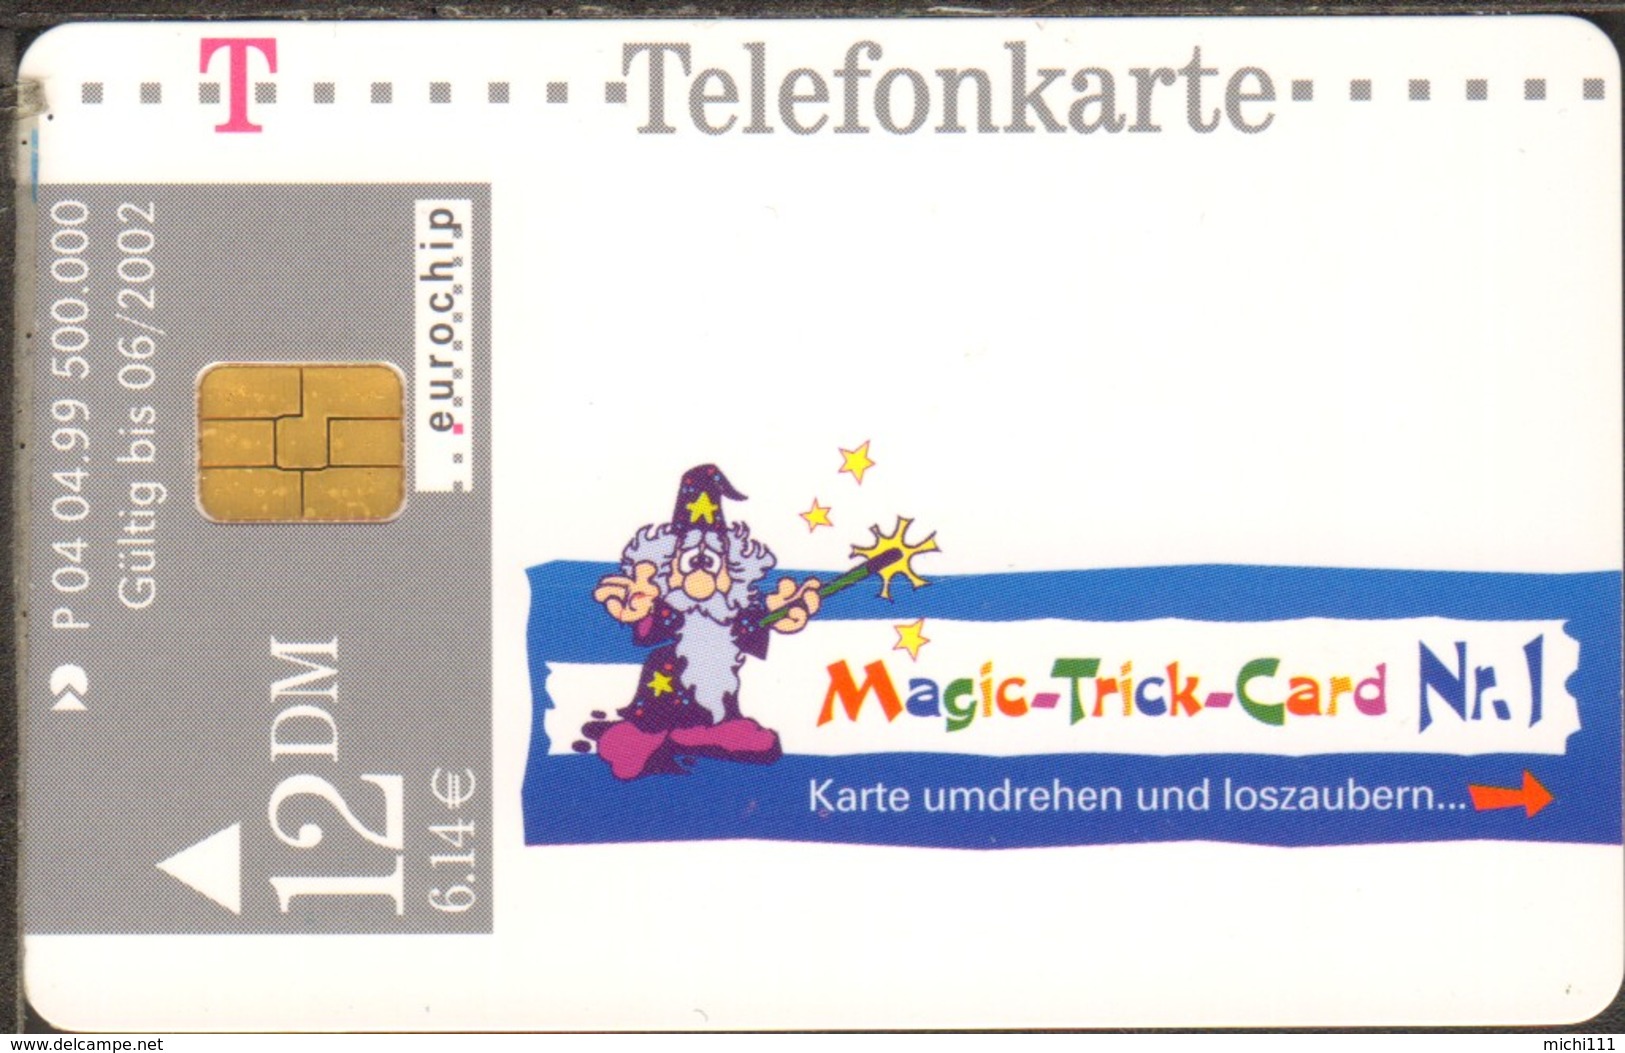 Phonecard Telefonkarte  Magic-Trick-Card Nr.1 P 04 04.99 12 DM/6,14€ Used - R-Series : Regions